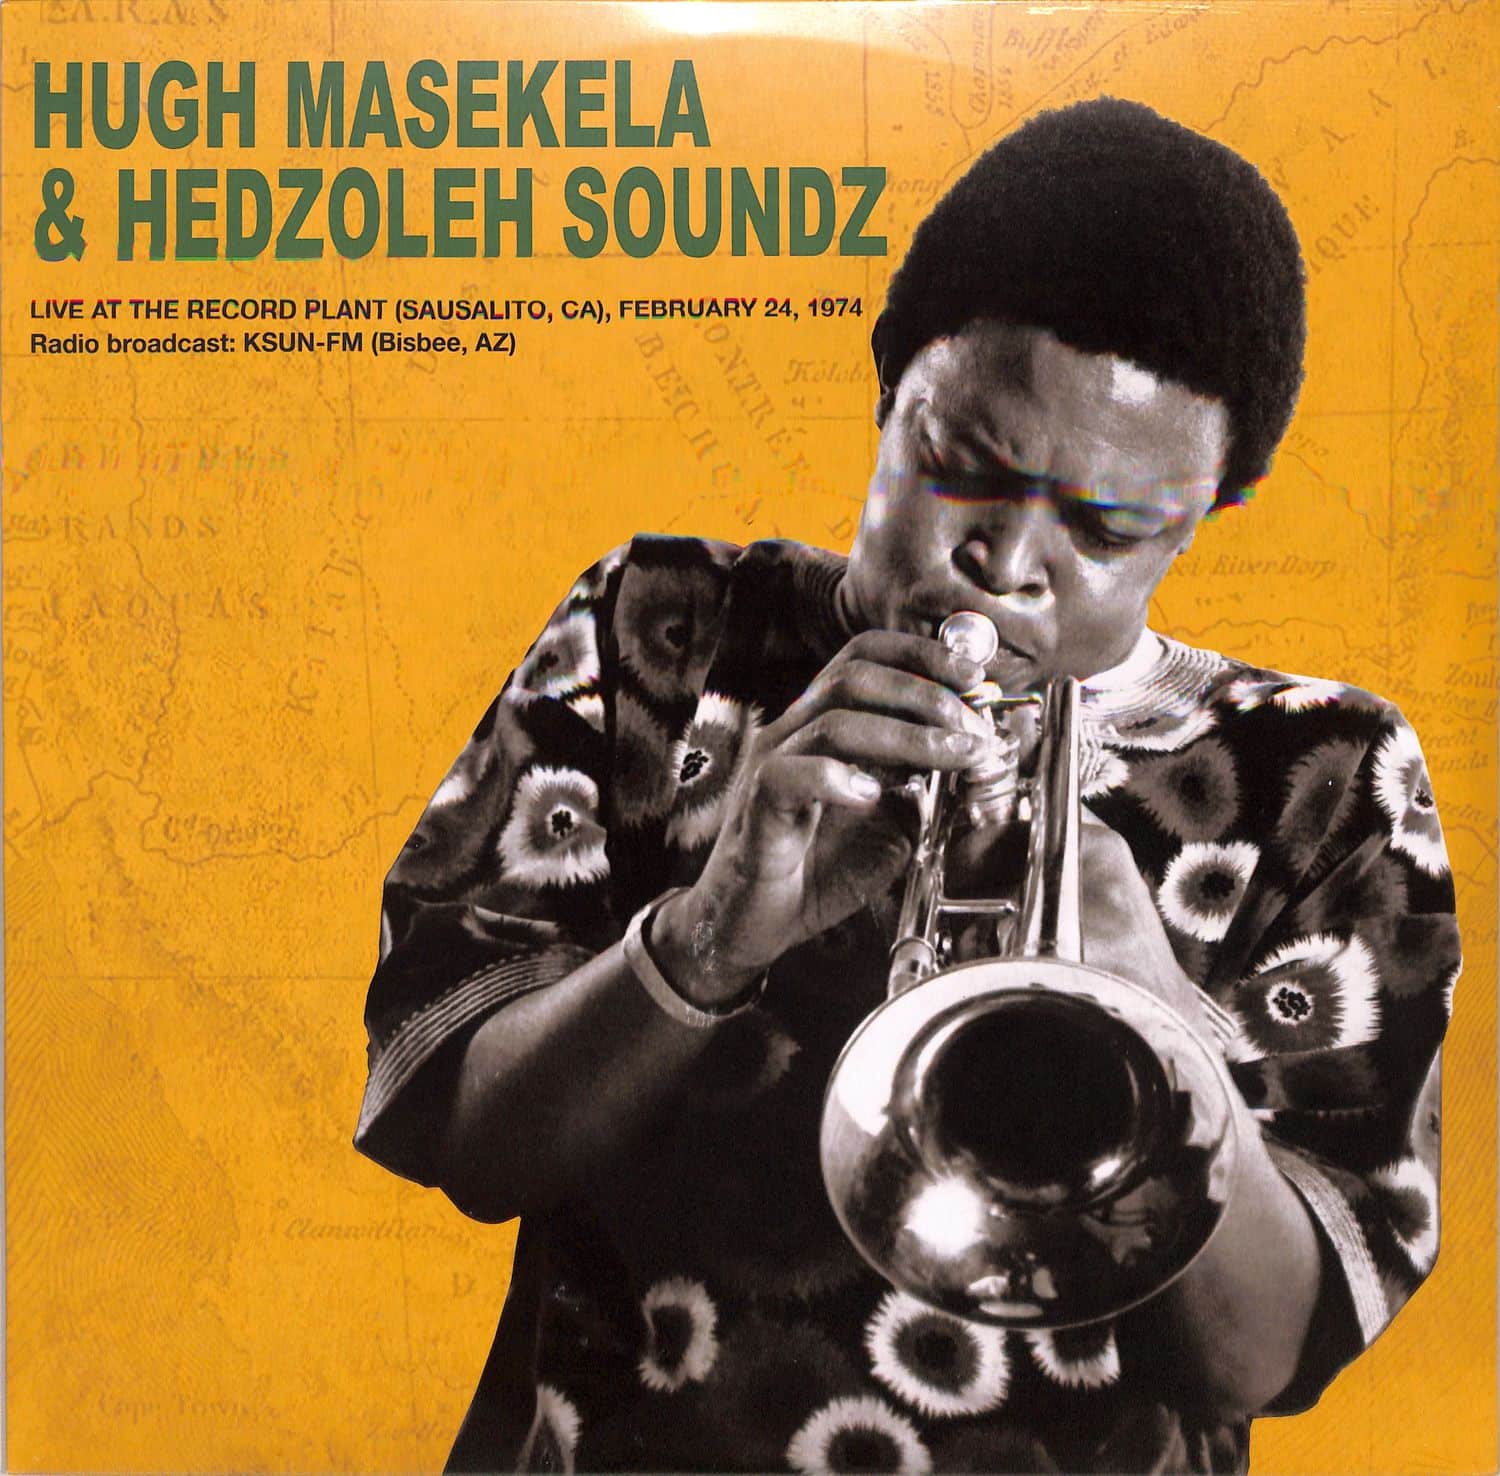 Hugh Masekela & Hedzoleh Soundz - LIVE AT THE RECORD PLANT 1974 